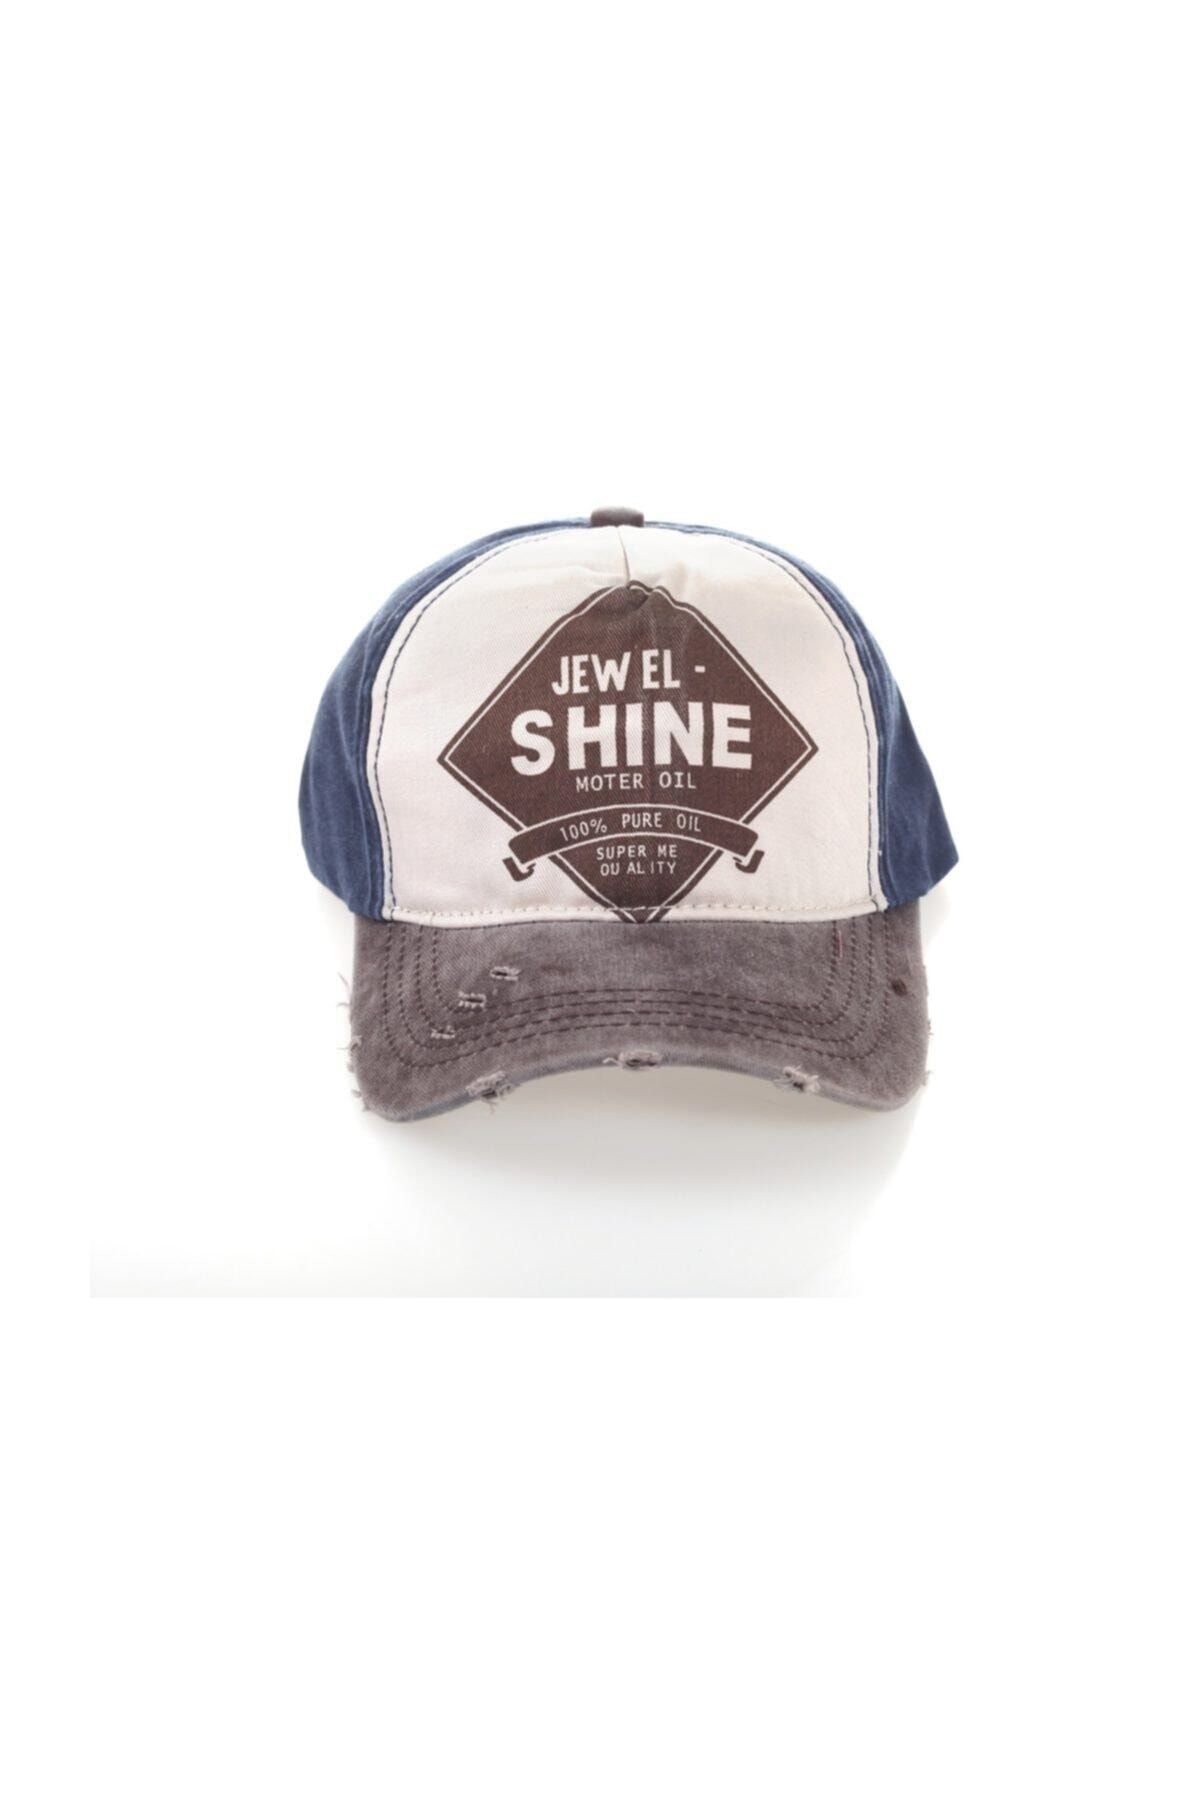 3D Jewel Shine Beyzbol Şapka Eskitme 2020 Model Şapka Mavi Kahverengi